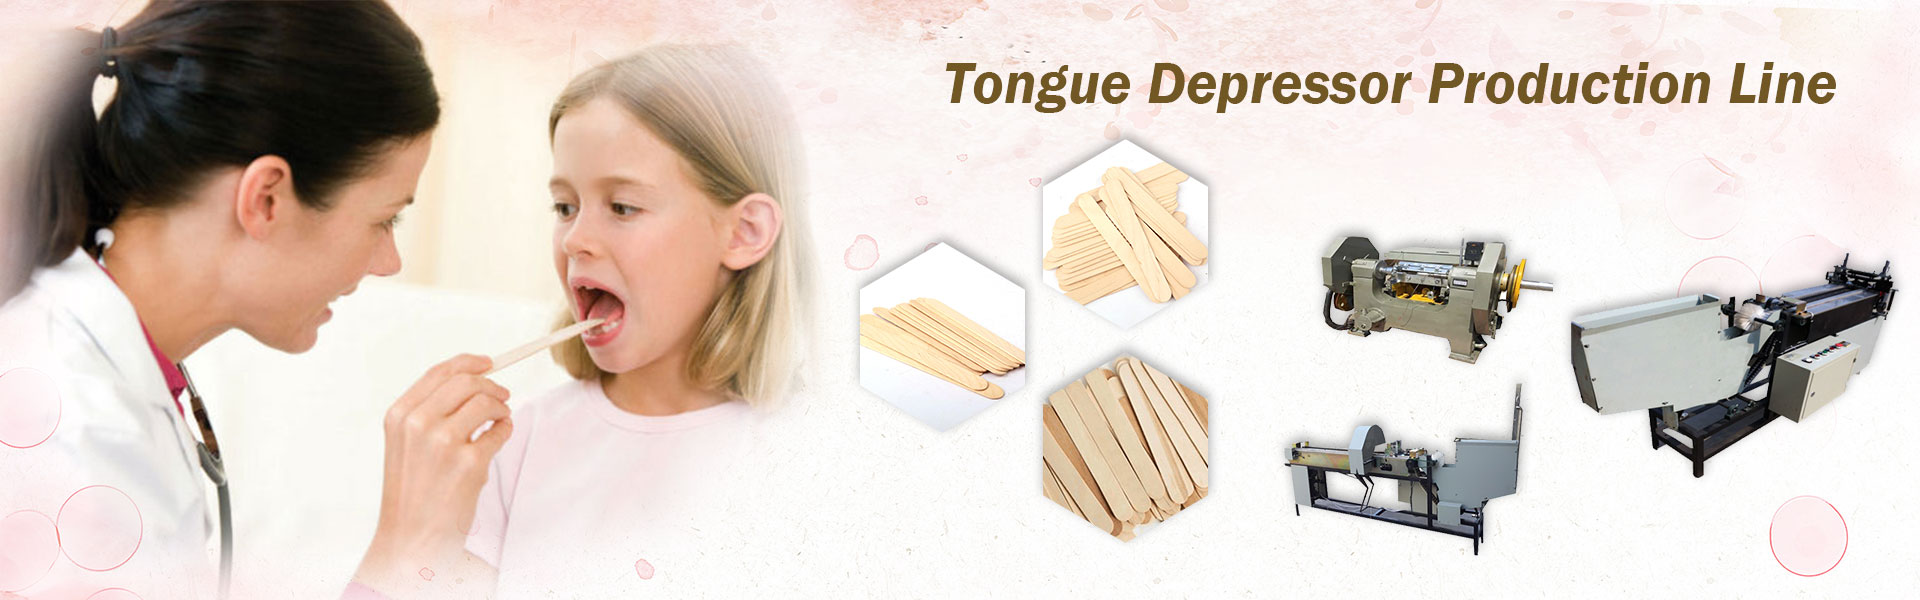 tongue depressor production line